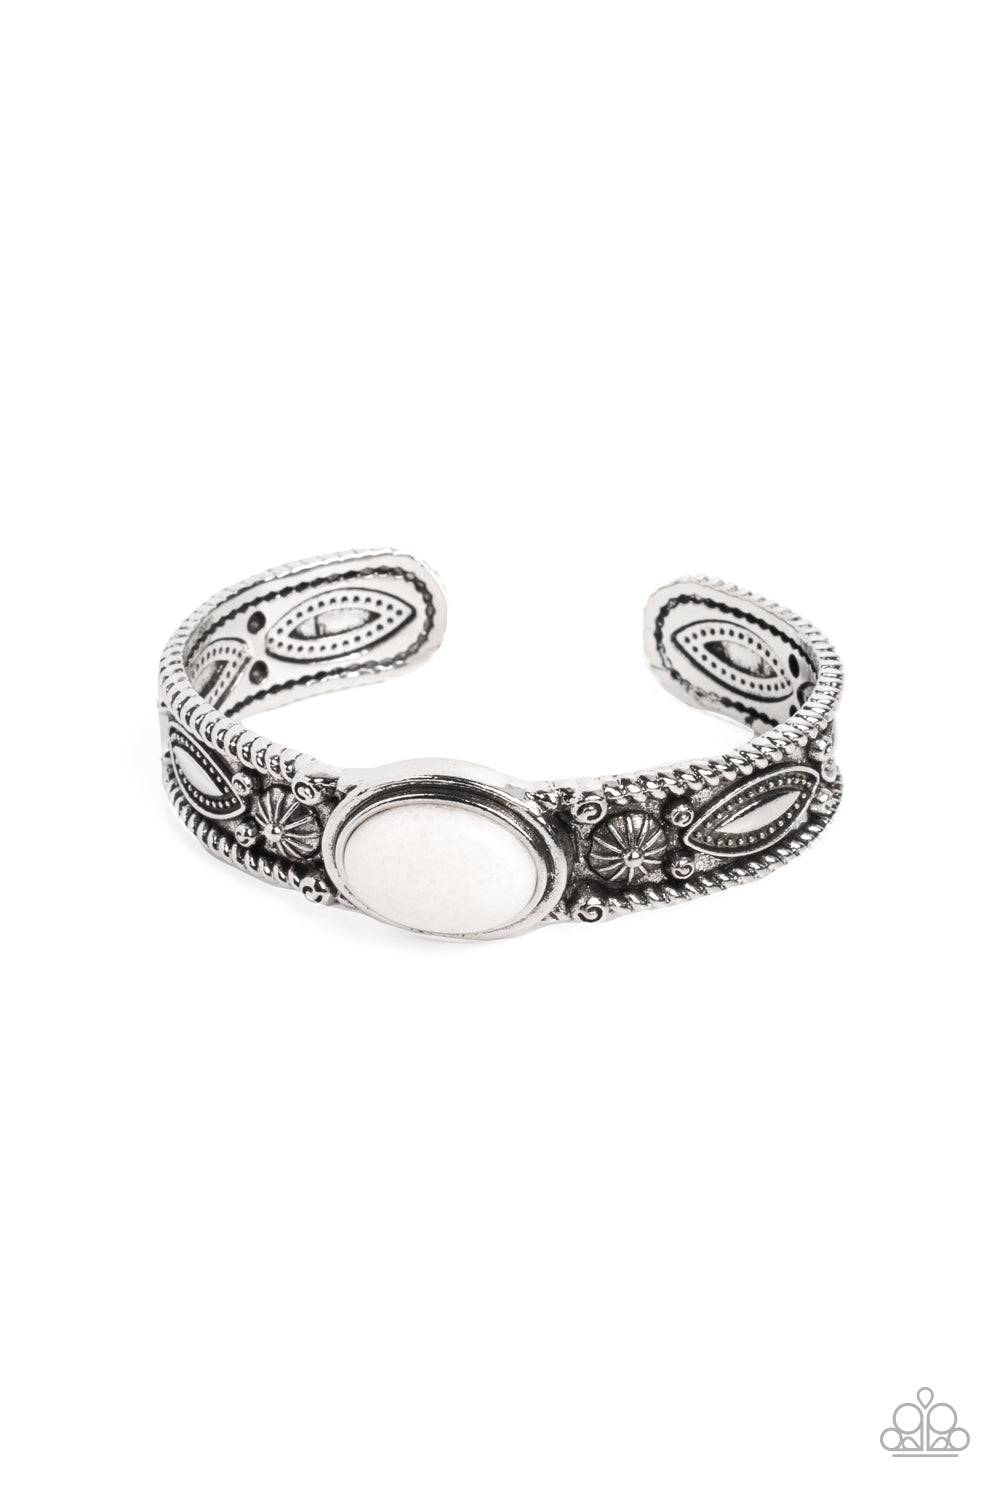 Rural Repose - White Stone Silver Cuff Bracelet